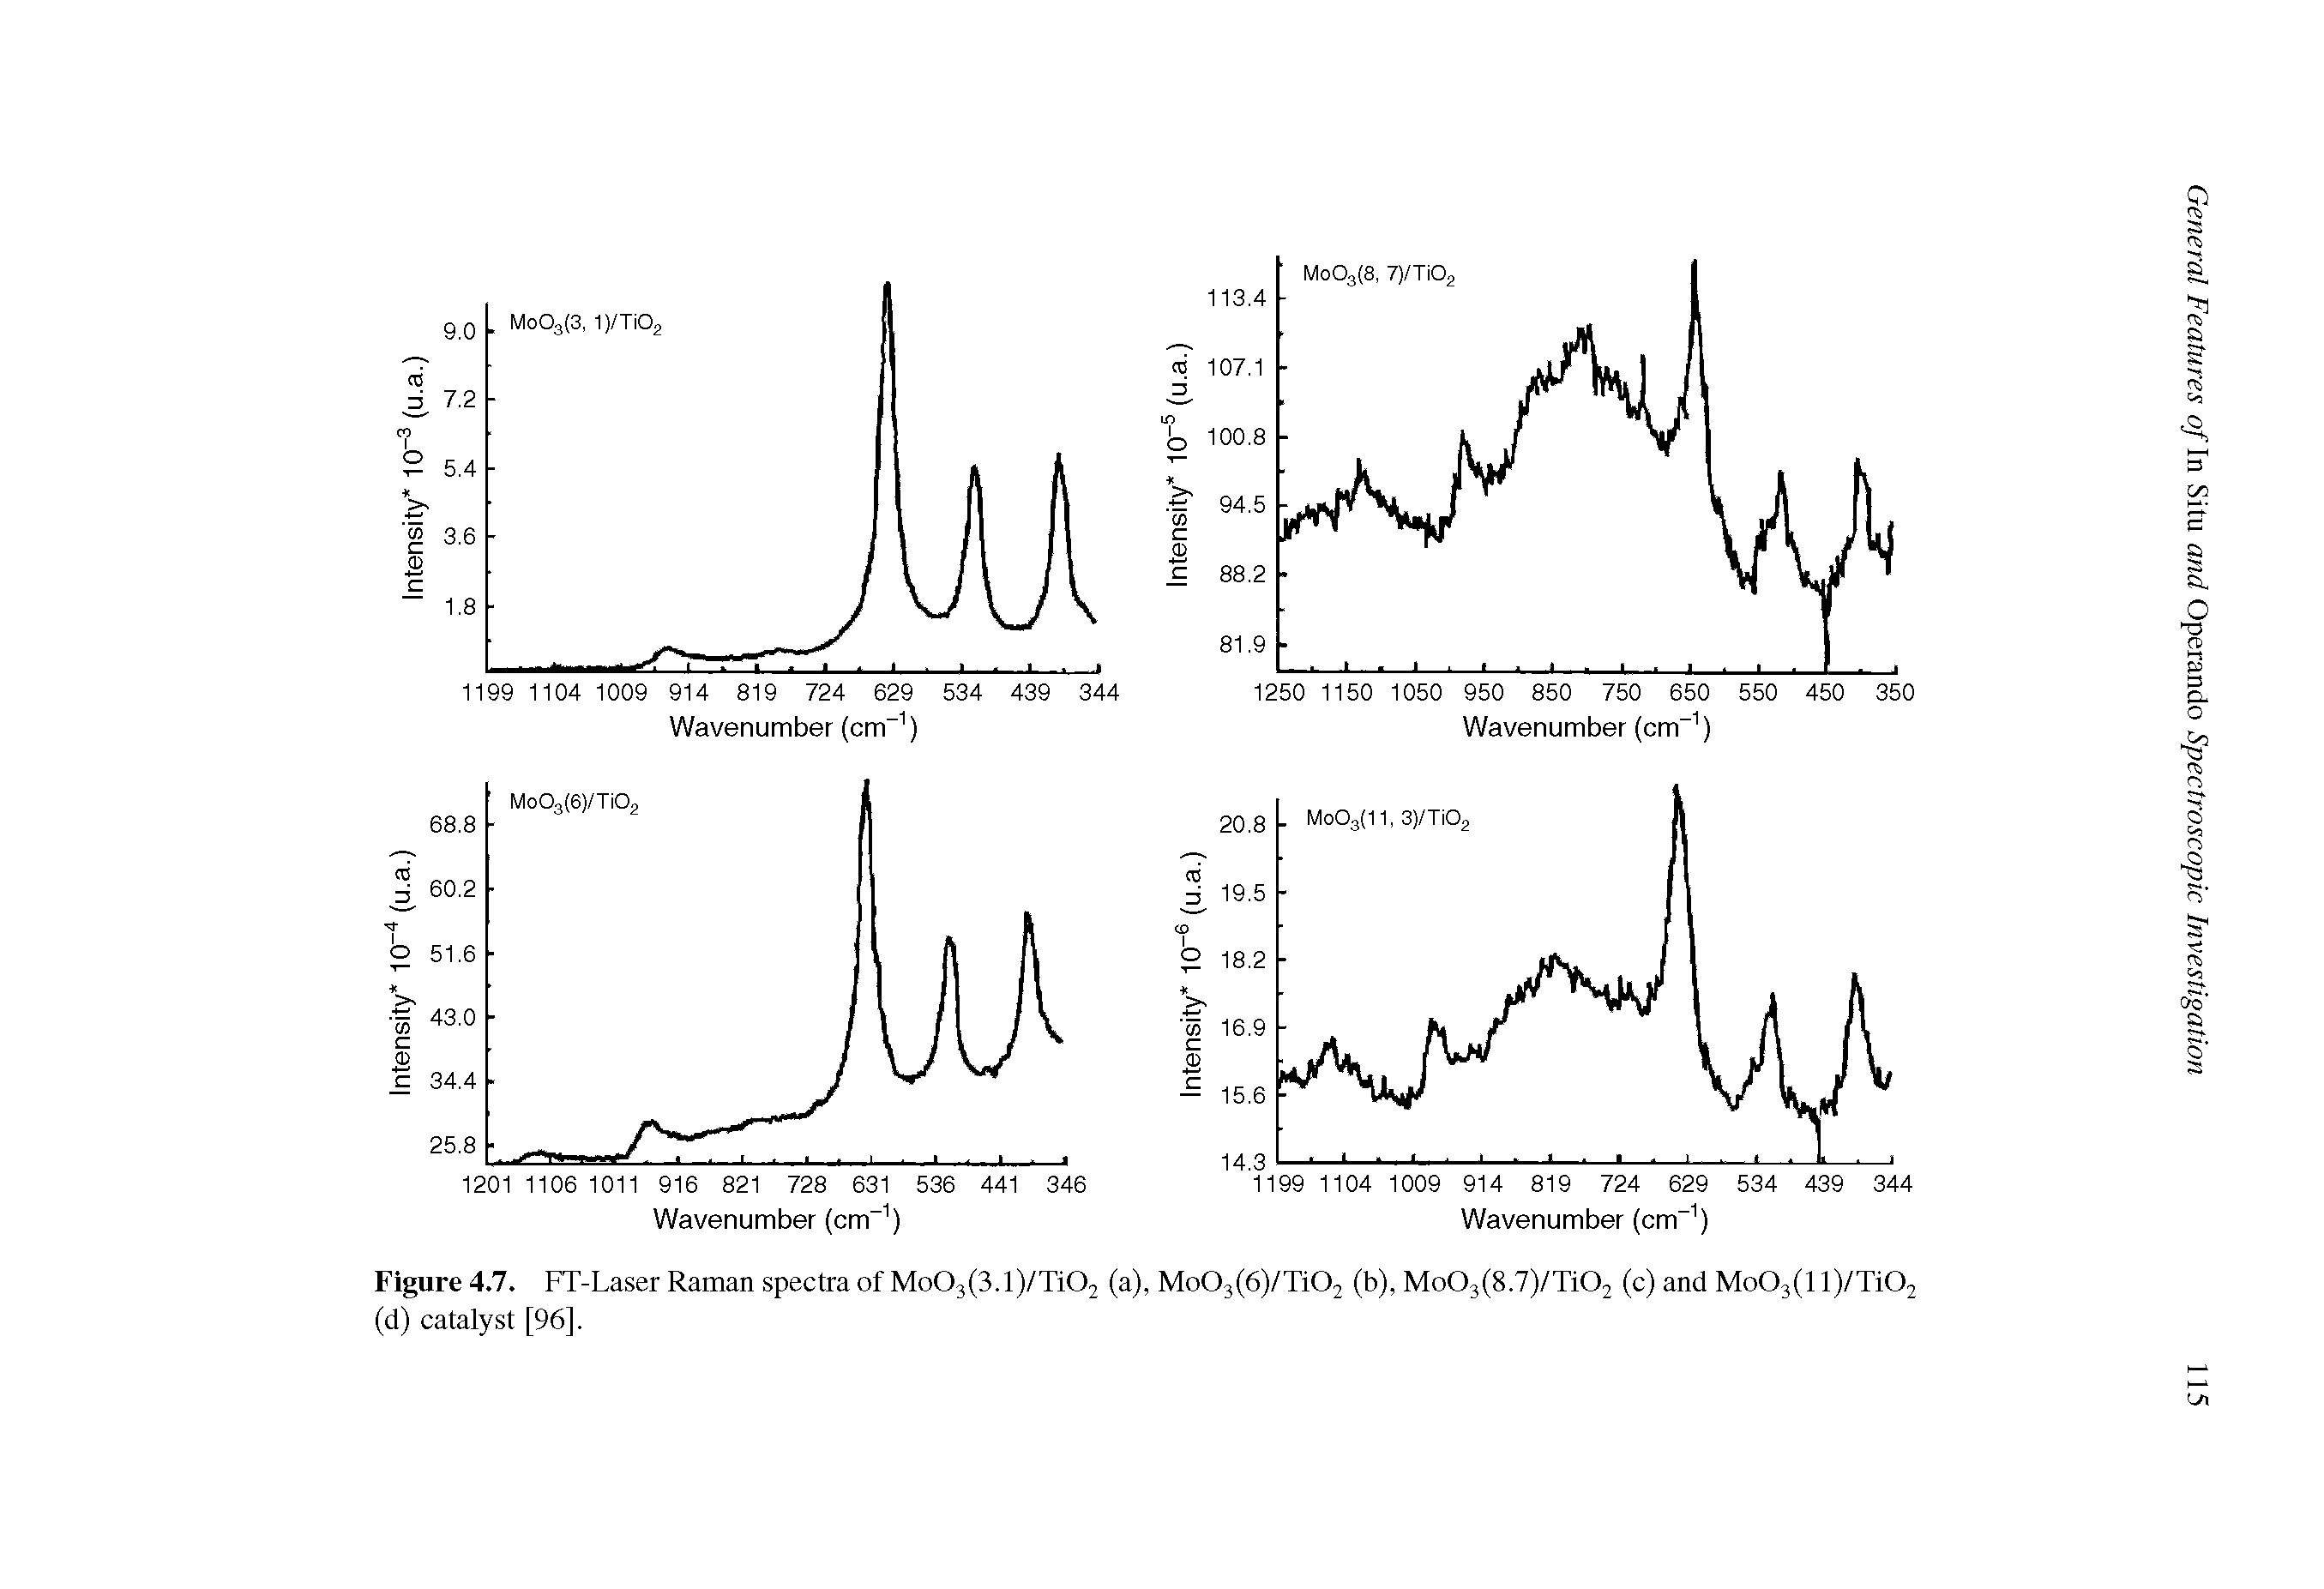 Figure 4.7. FT-Laser Raman spectra of Mo03(3.1)/Ti02 (a), Mo03(6)/Ti02 (b), Mo03(8.7)/Ti02 (c) and Mo03(ll)/TiO (d) catalyst [96].